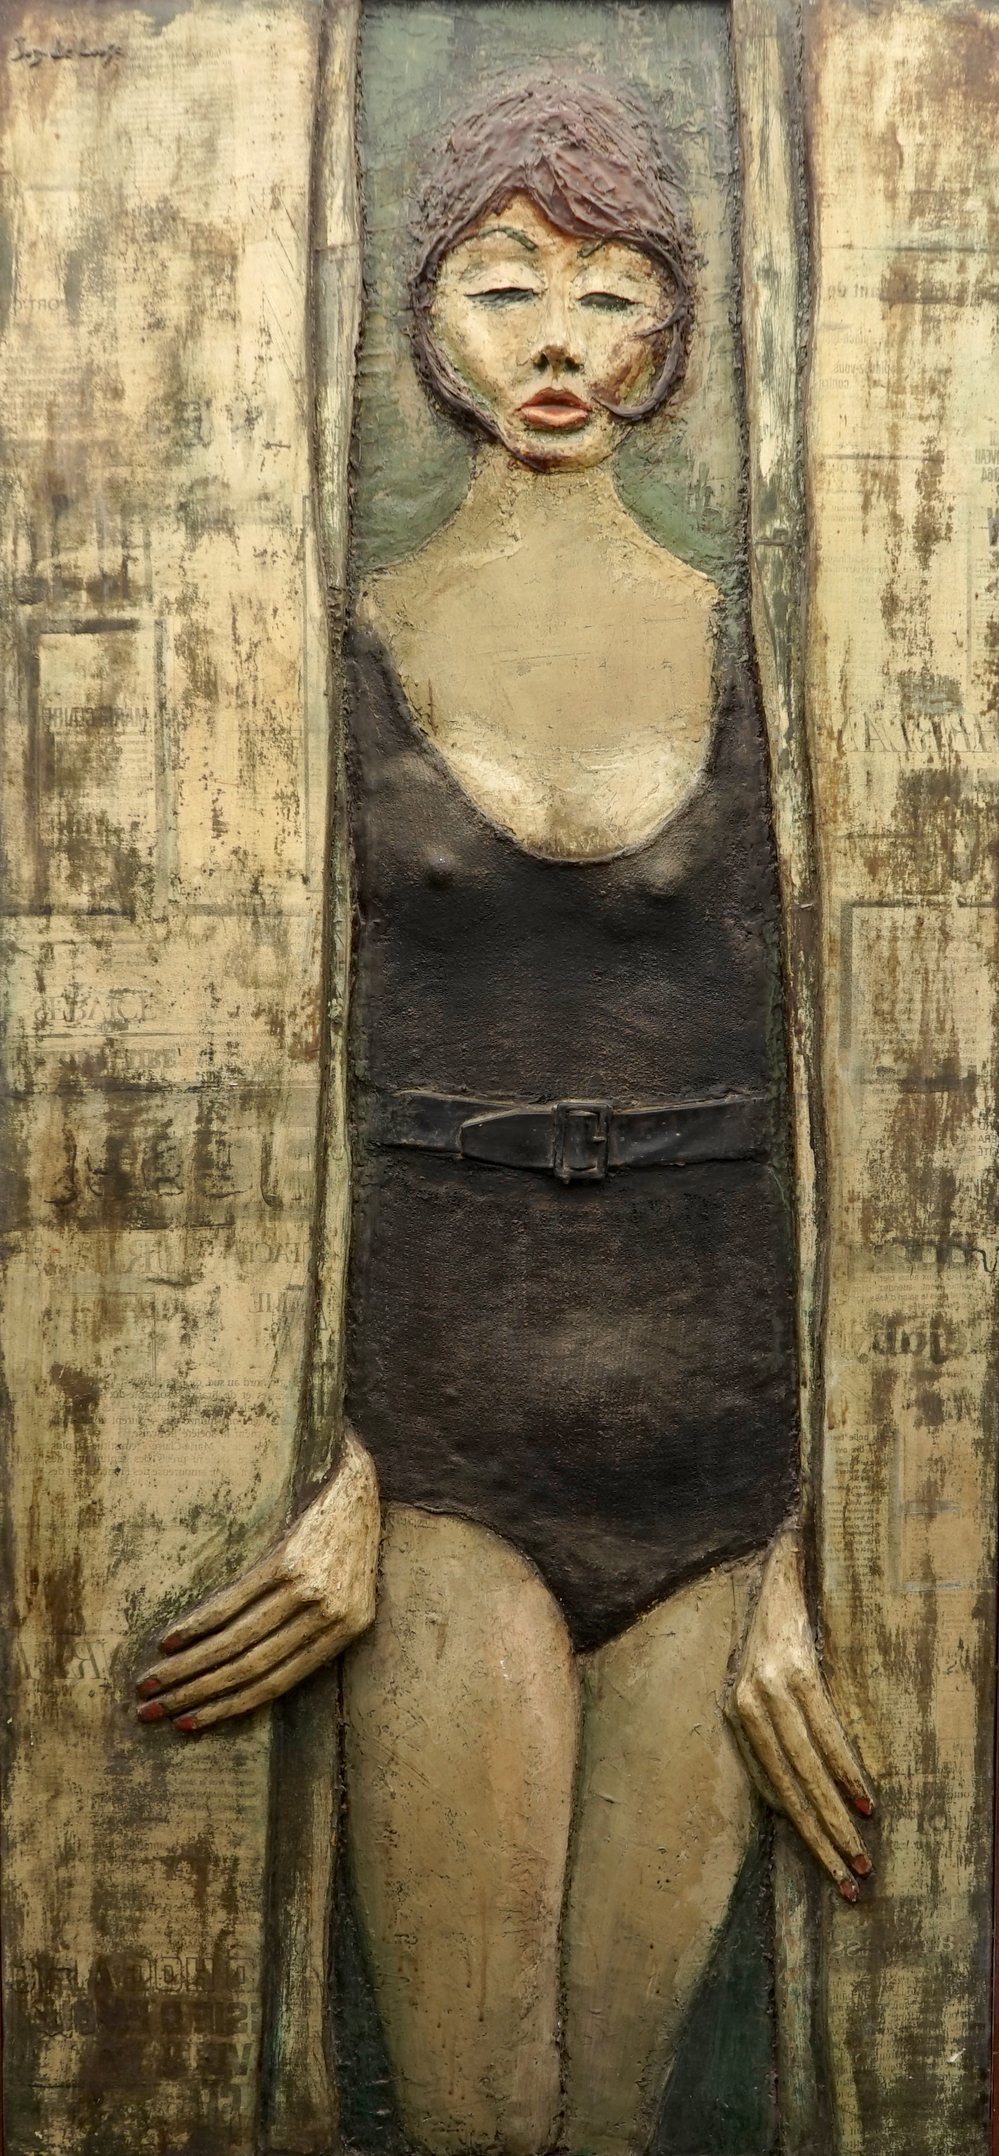 Joz De Loose (1925-2011), Plankenkoorts, 1966, polyester on panel